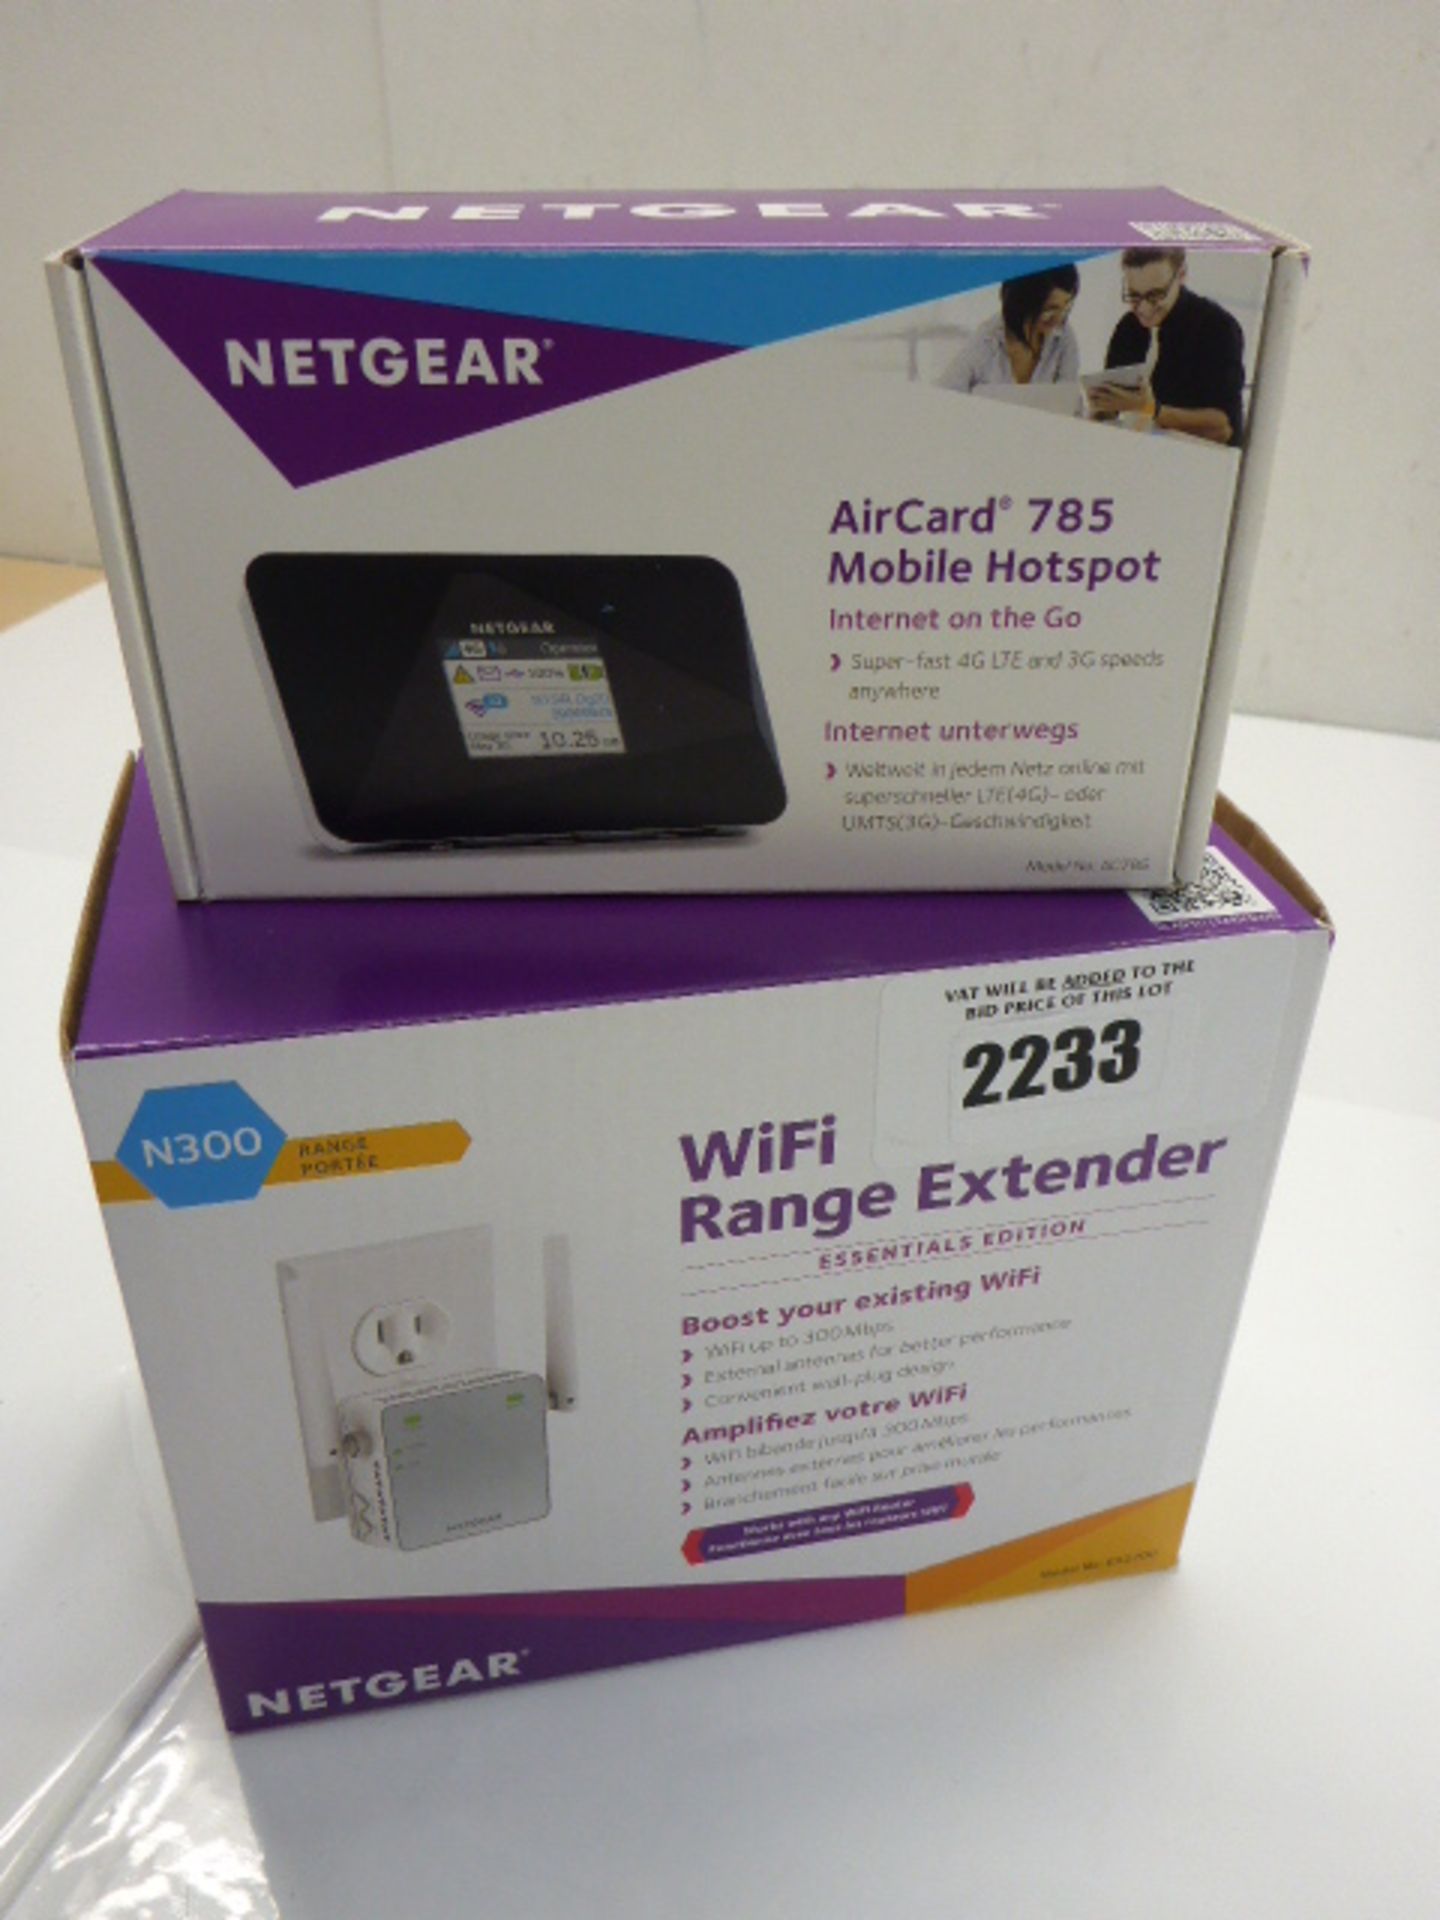 Netgear wi-fi range extender, and a Netgear Aircard 785.